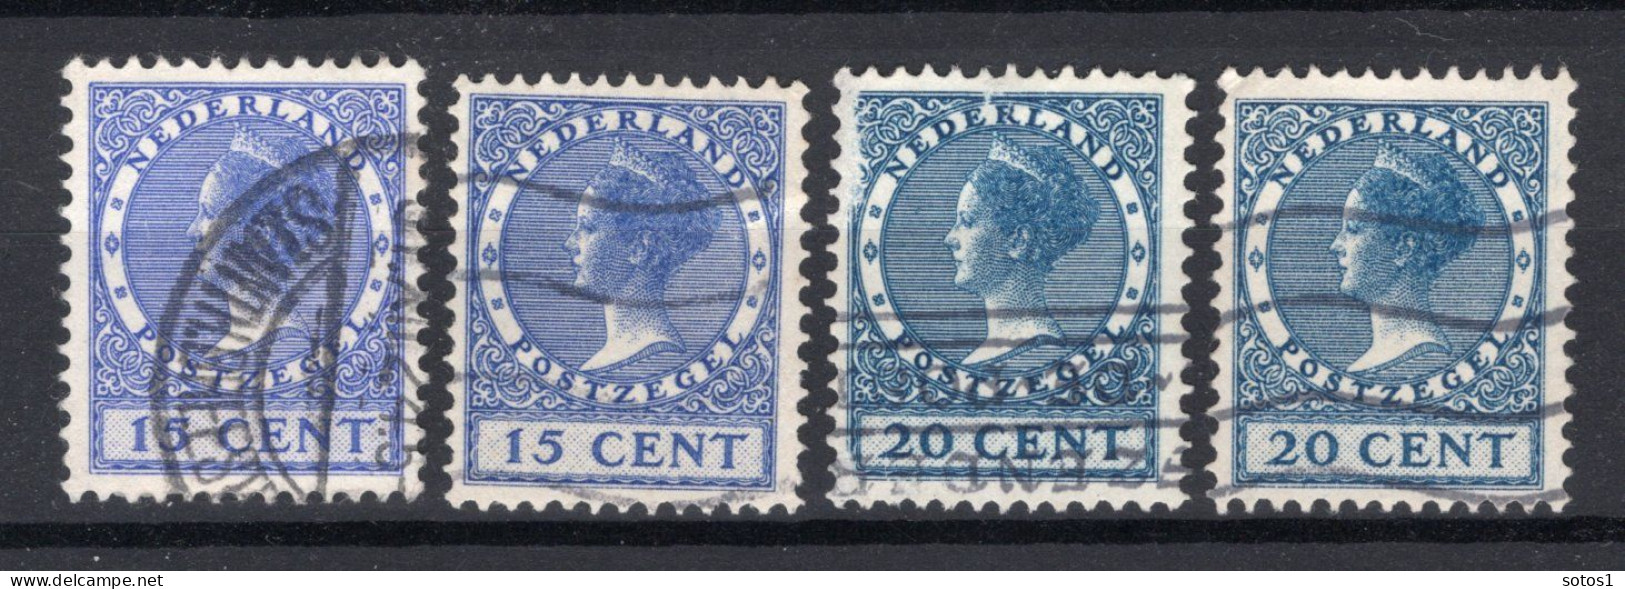 NEDERLAND 155/156 Gestempeld 1924-1926 - Koningin Wilhelmina (2 Stuks) - Oblitérés